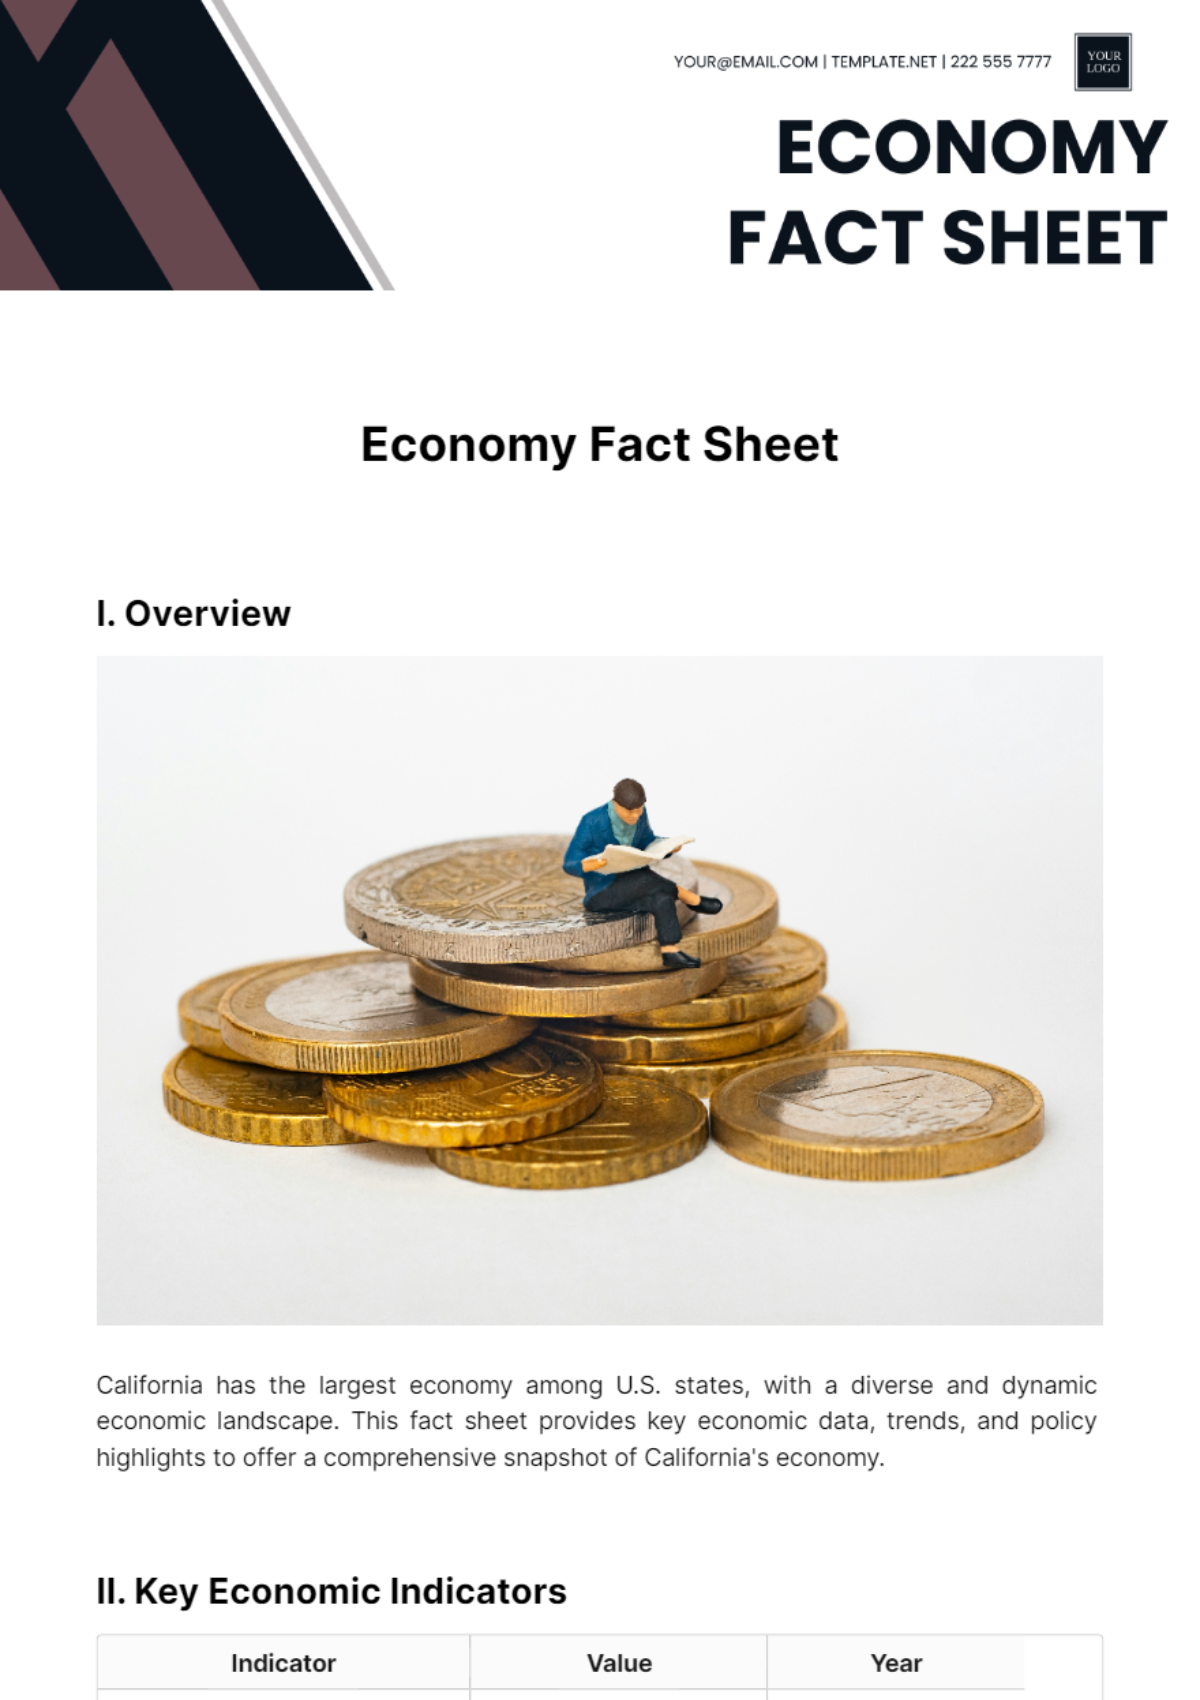 Economy Fact Sheet Template